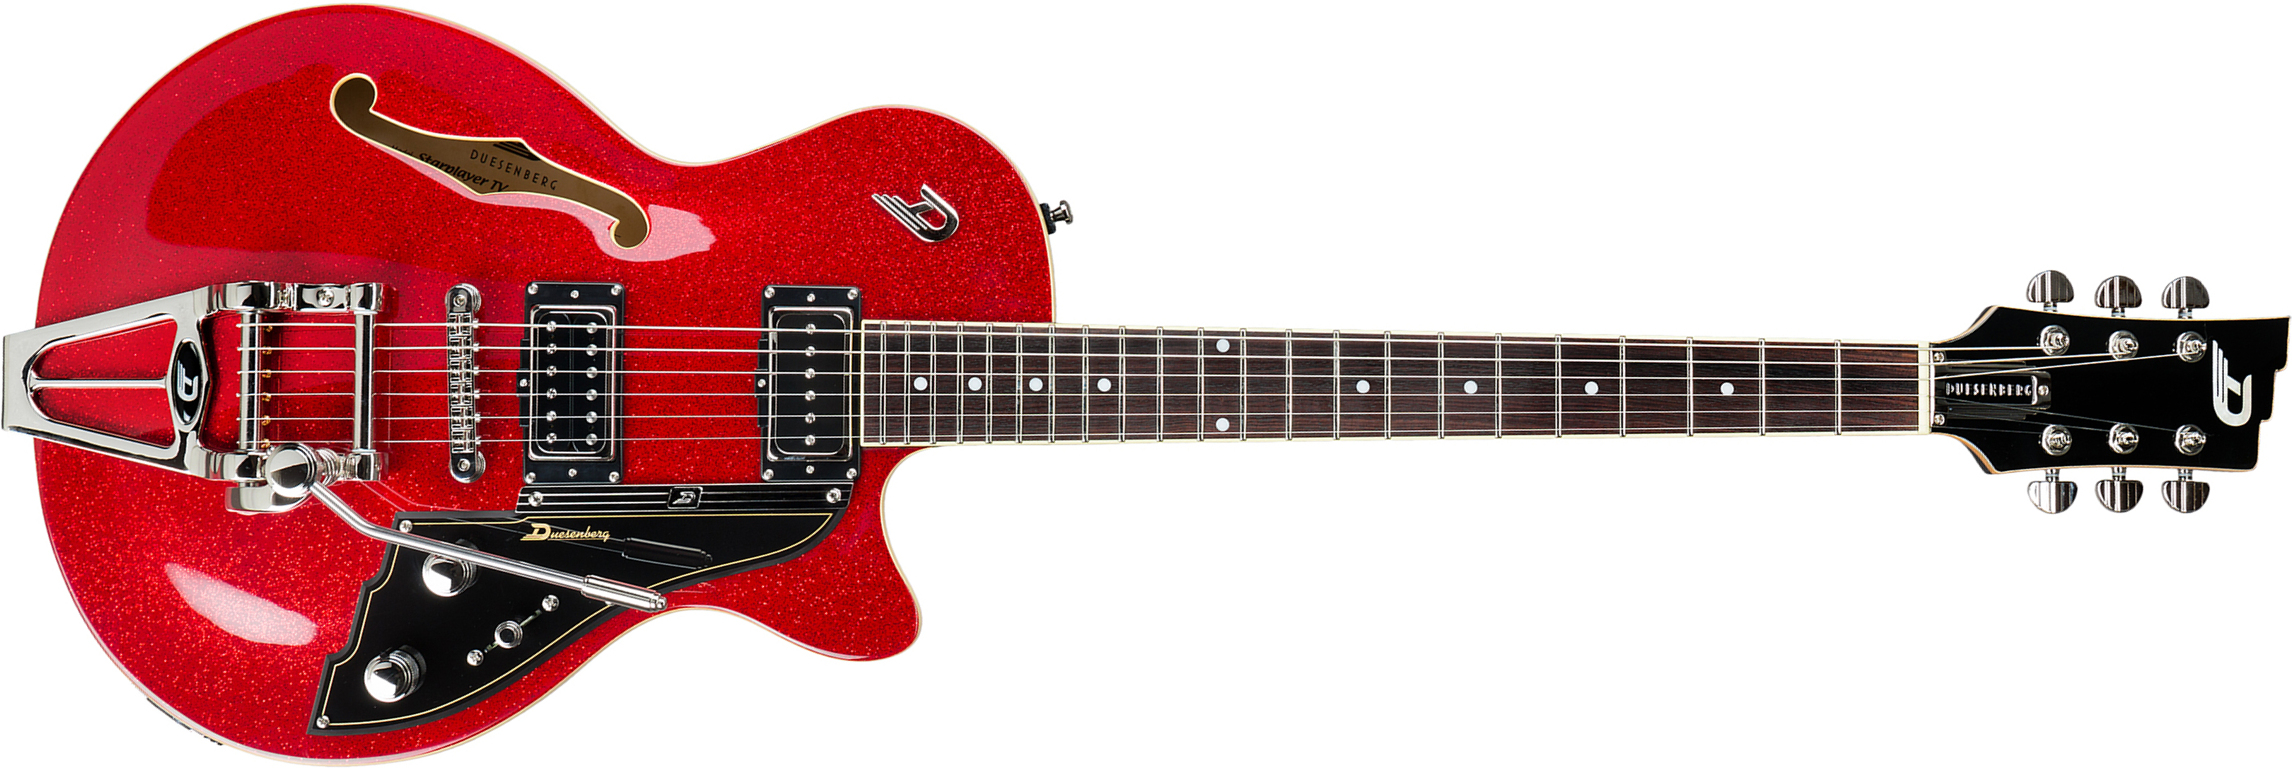 Duesenberg Starplayer Tv Hs Trem Rw - Red Sparkle - Semi-hollow electric guitar - Main picture